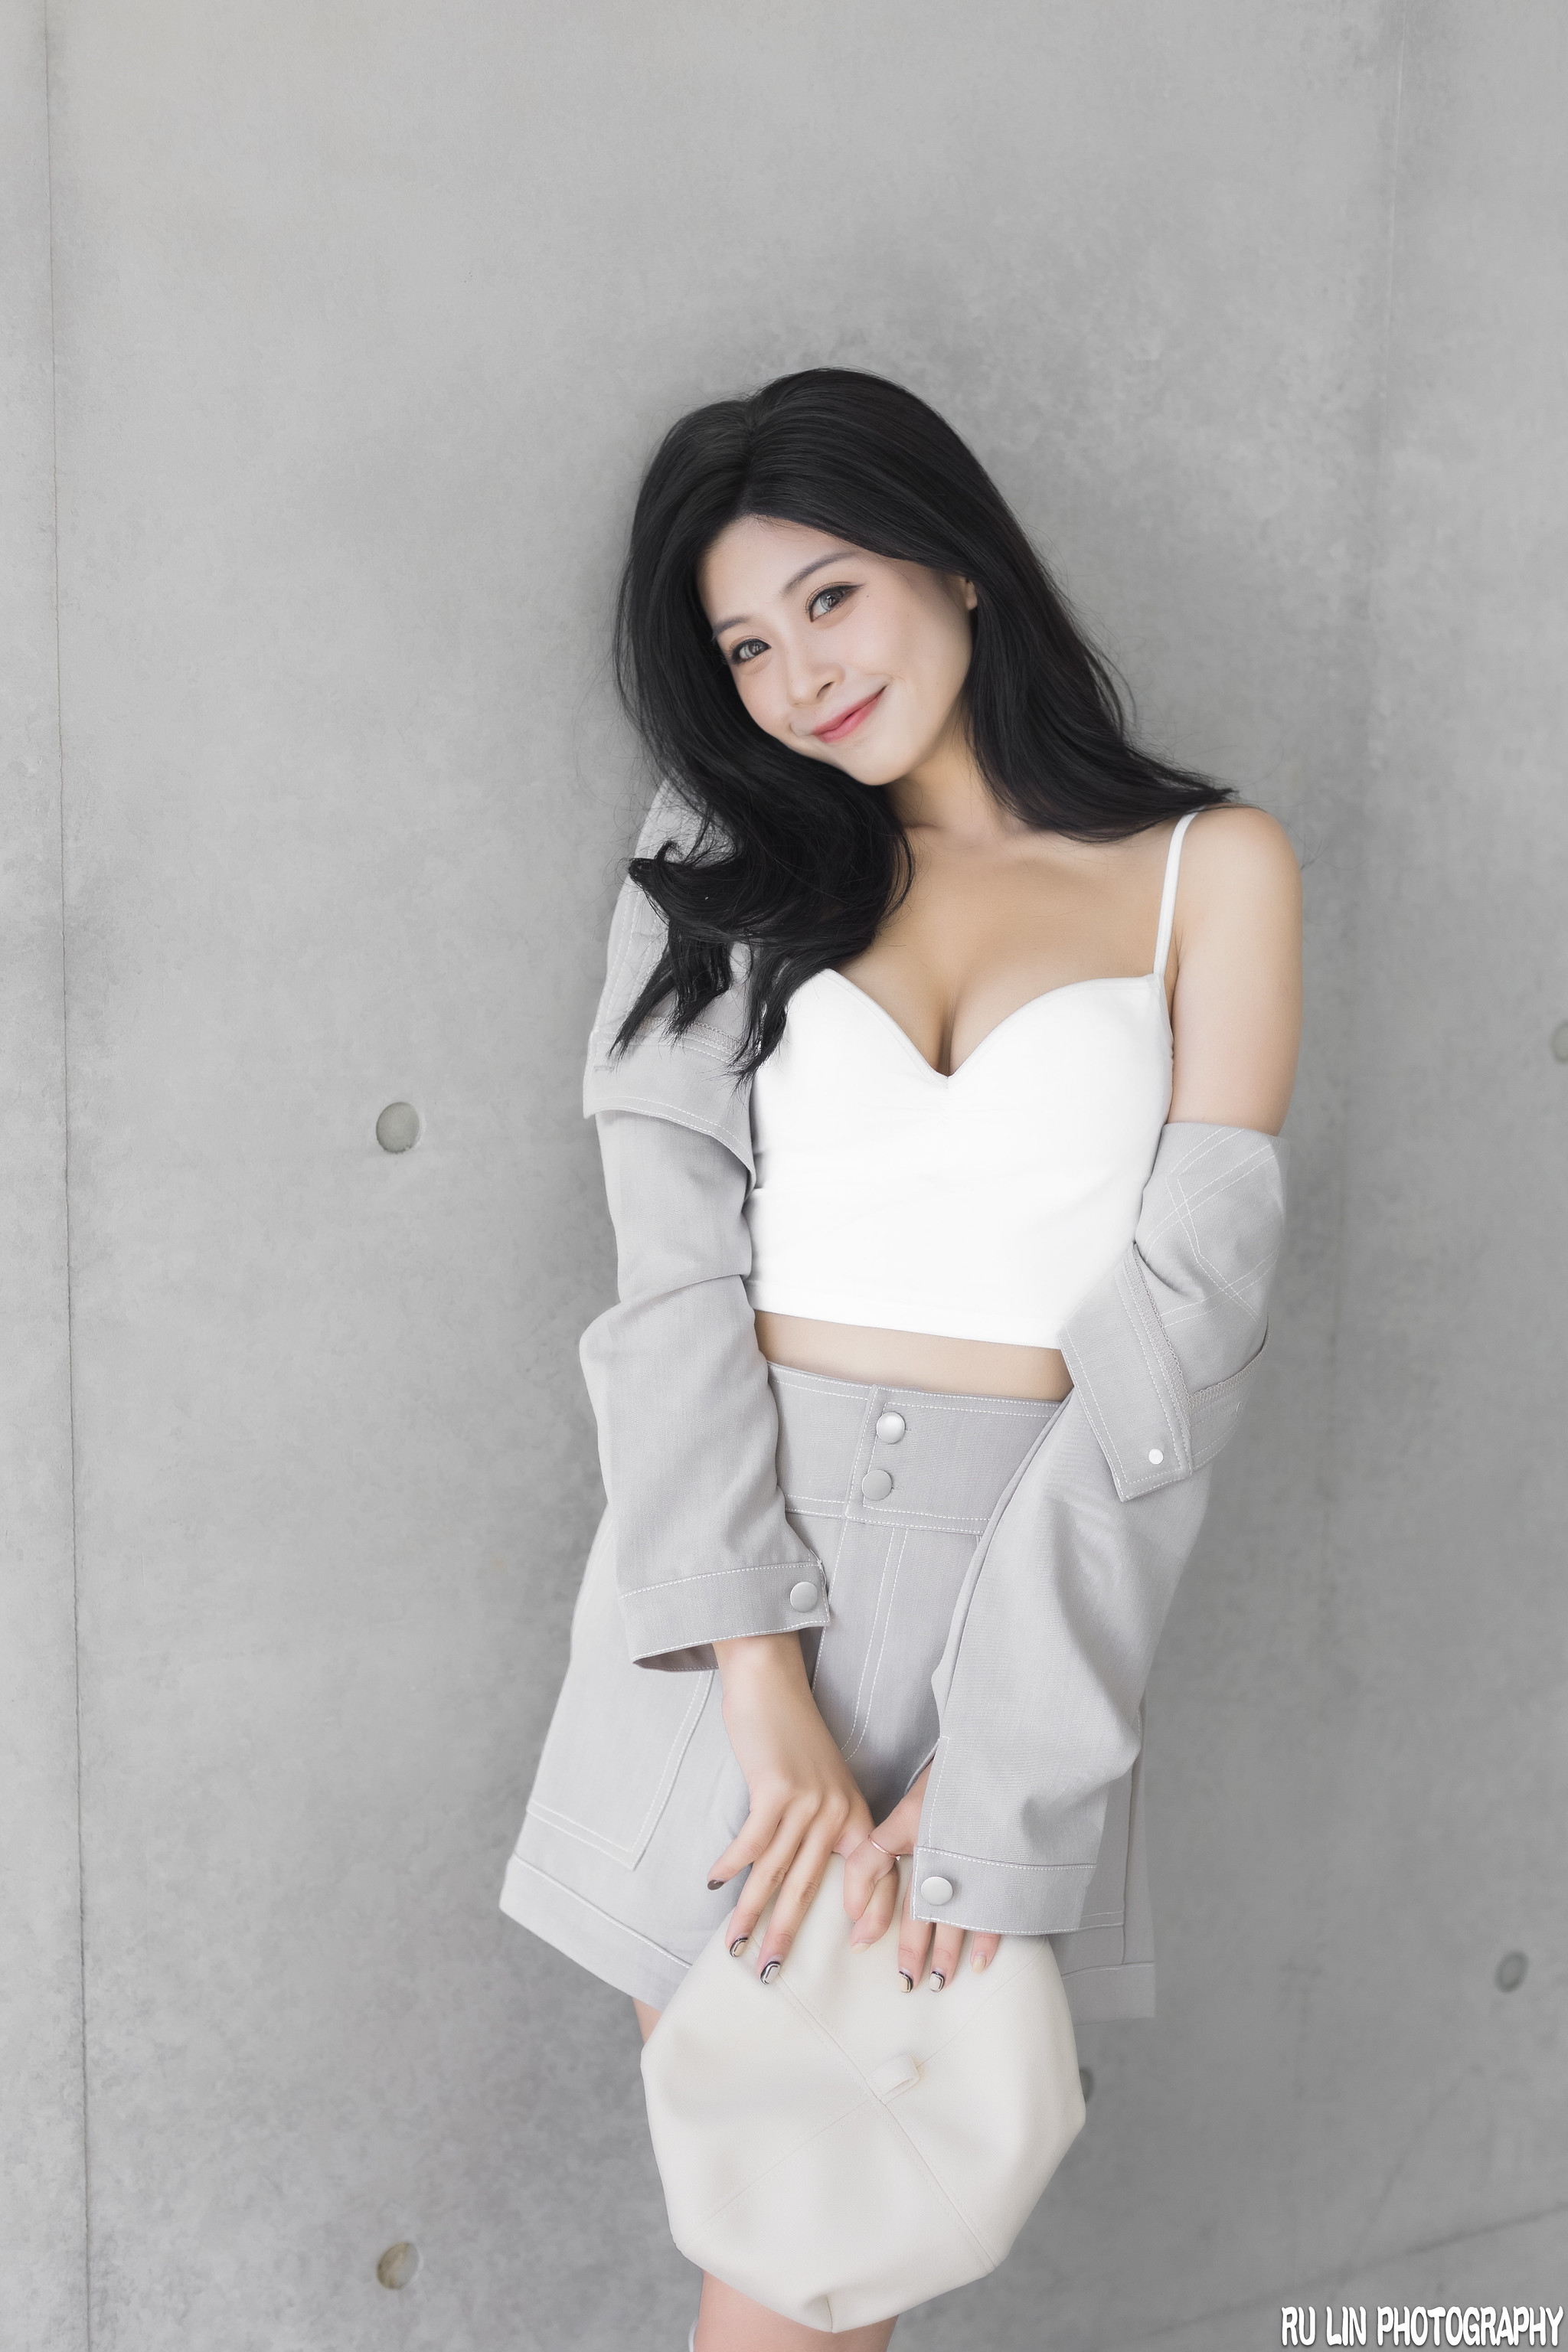 Ru Lin Women PinQ Asian Dark Hair Makeup Casual Wall Outdoors Grey Clothing White Clothing Berets Wh 2048x3072